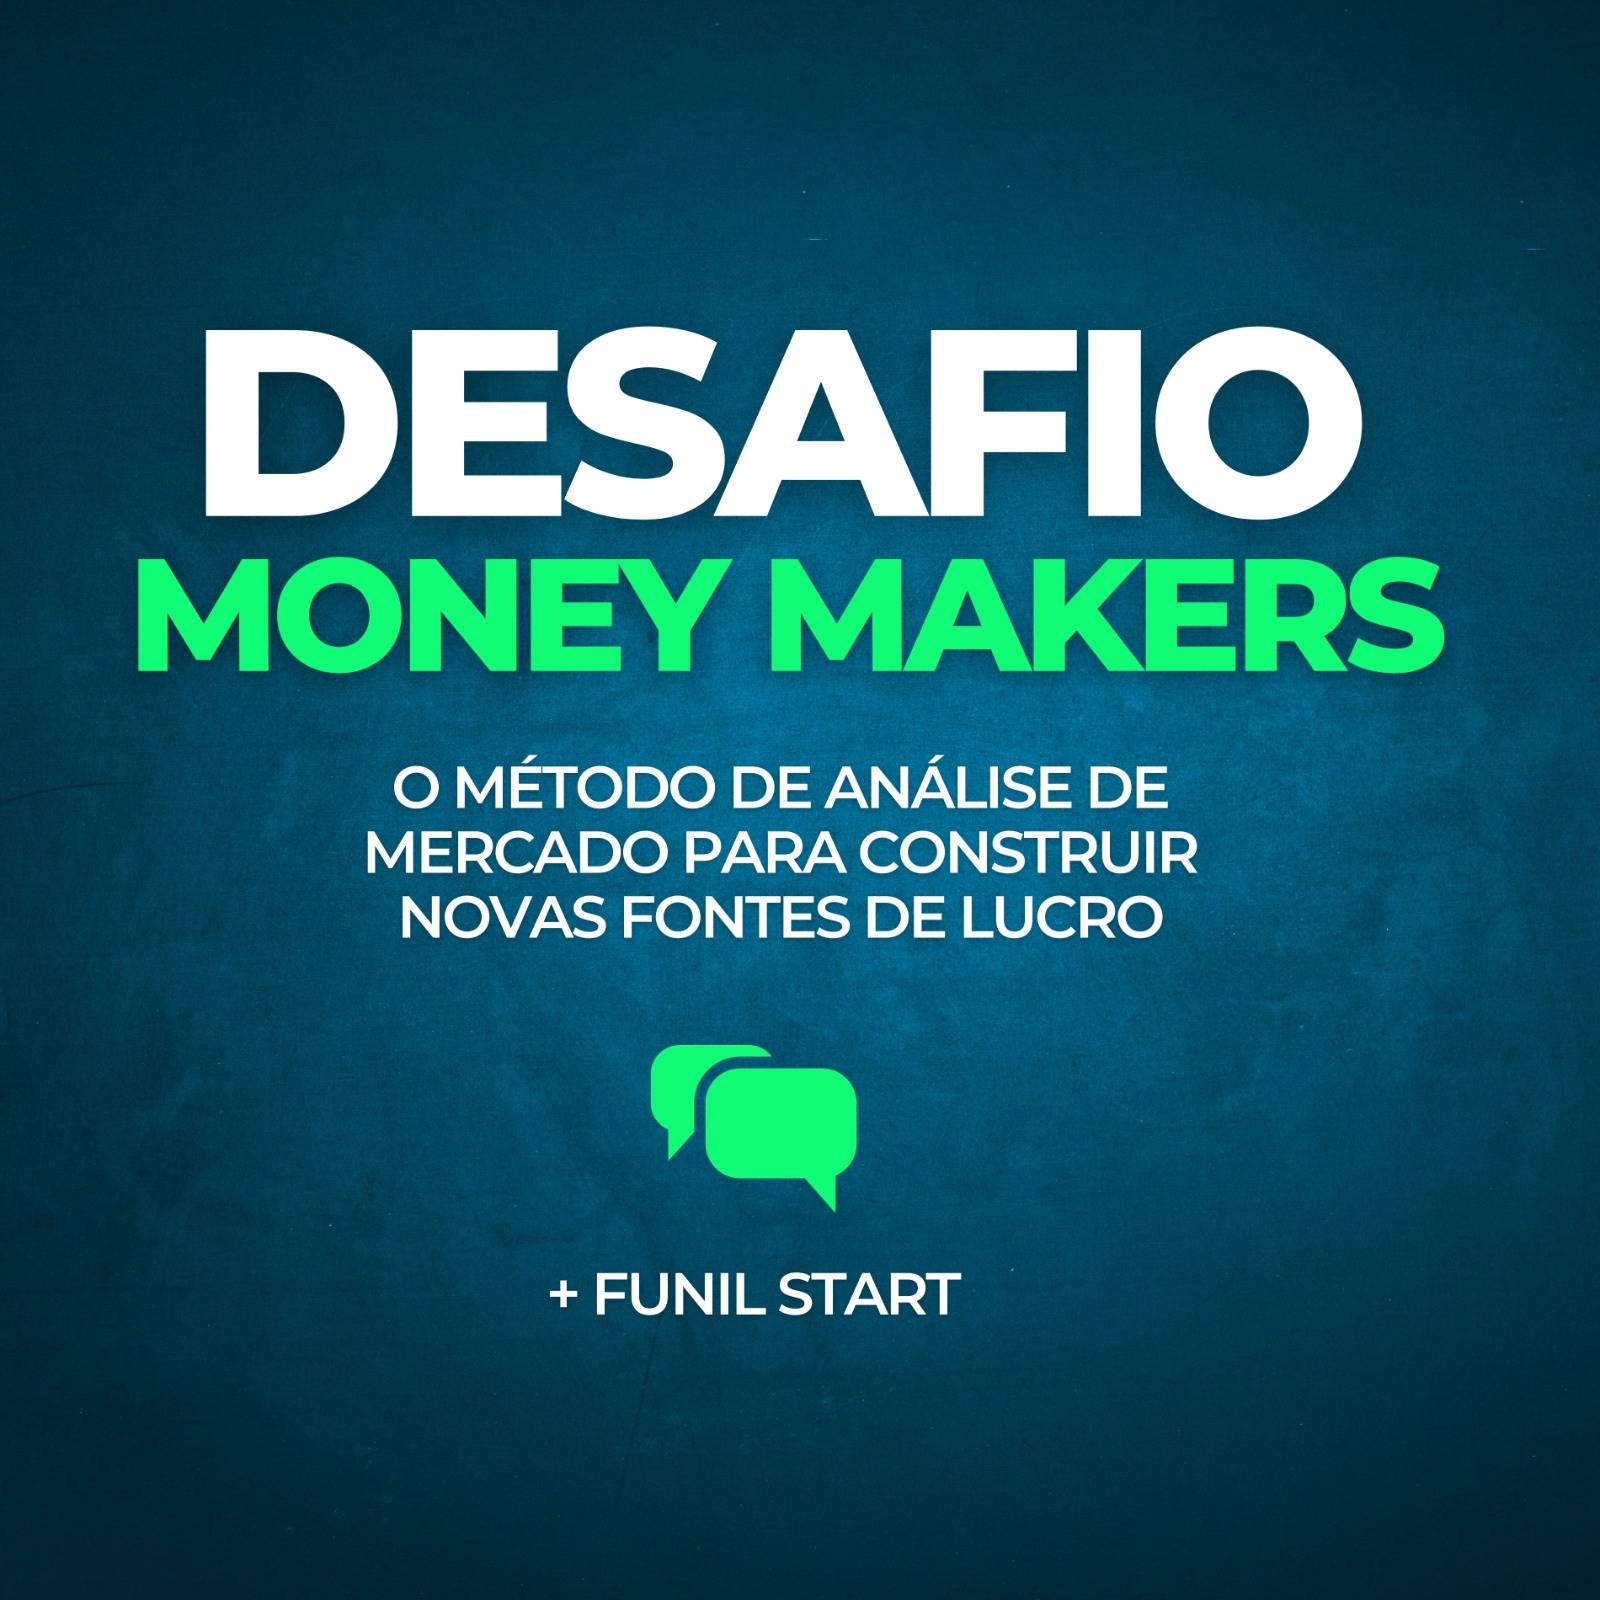 Desafio MoneyMakers - Como Analisar o Mercado e Encontrar Fontes de Lucro + Funil Start 133